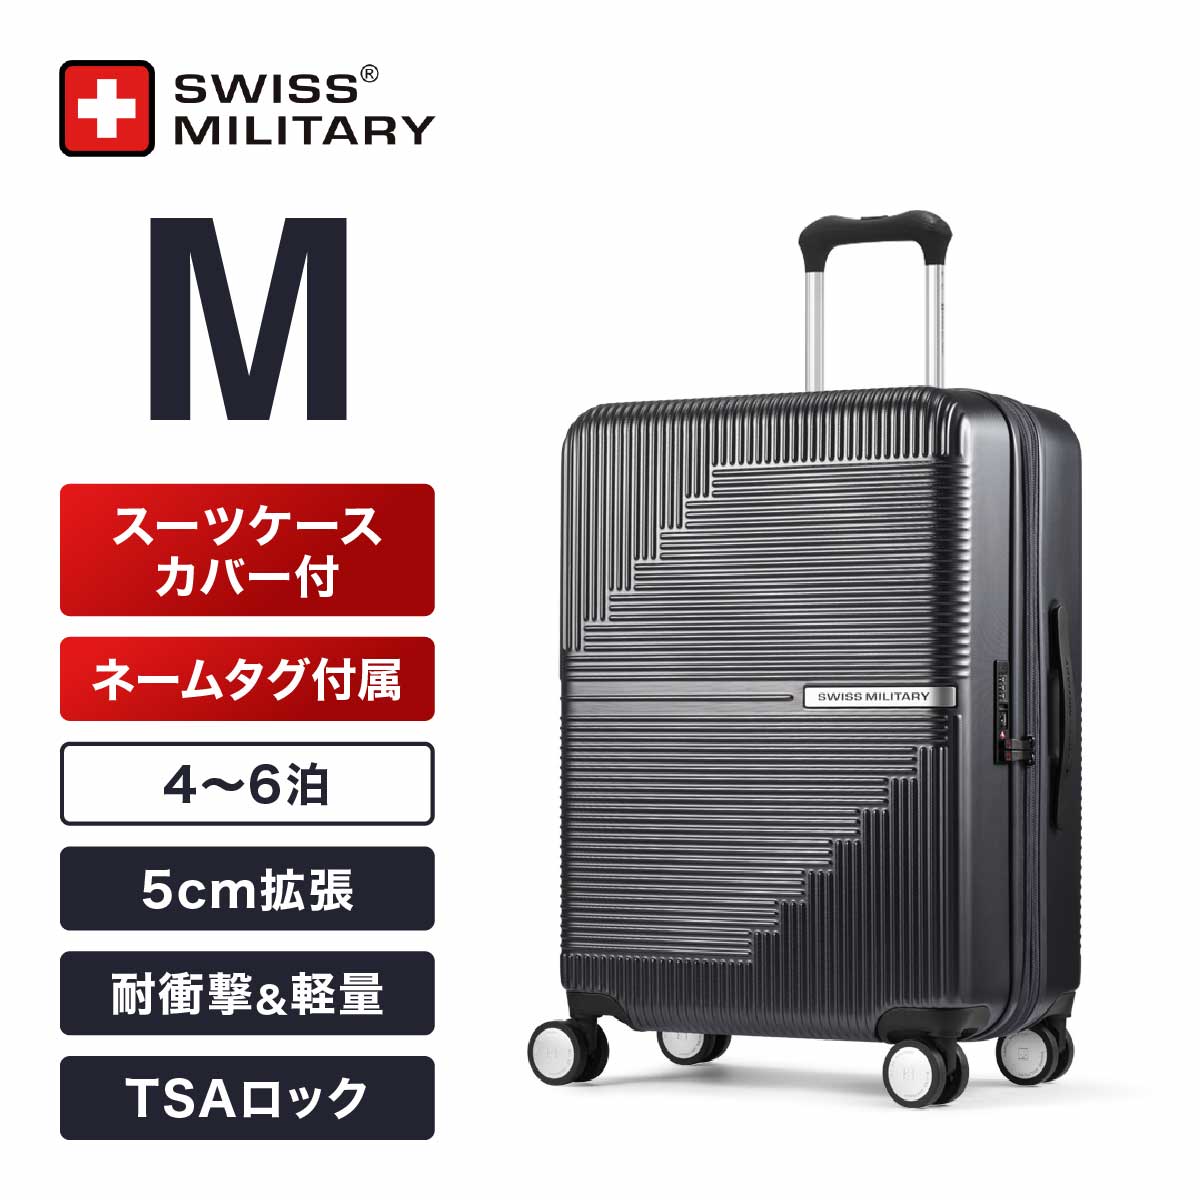 スーツケース Mサイズ 4～6泊 66cm 74/88L 5cm拡張 TSAロック スーツケースカバー/ネームタグ付 GENESIS(ジェネシス) ダークグレー SM-O324 GRAY